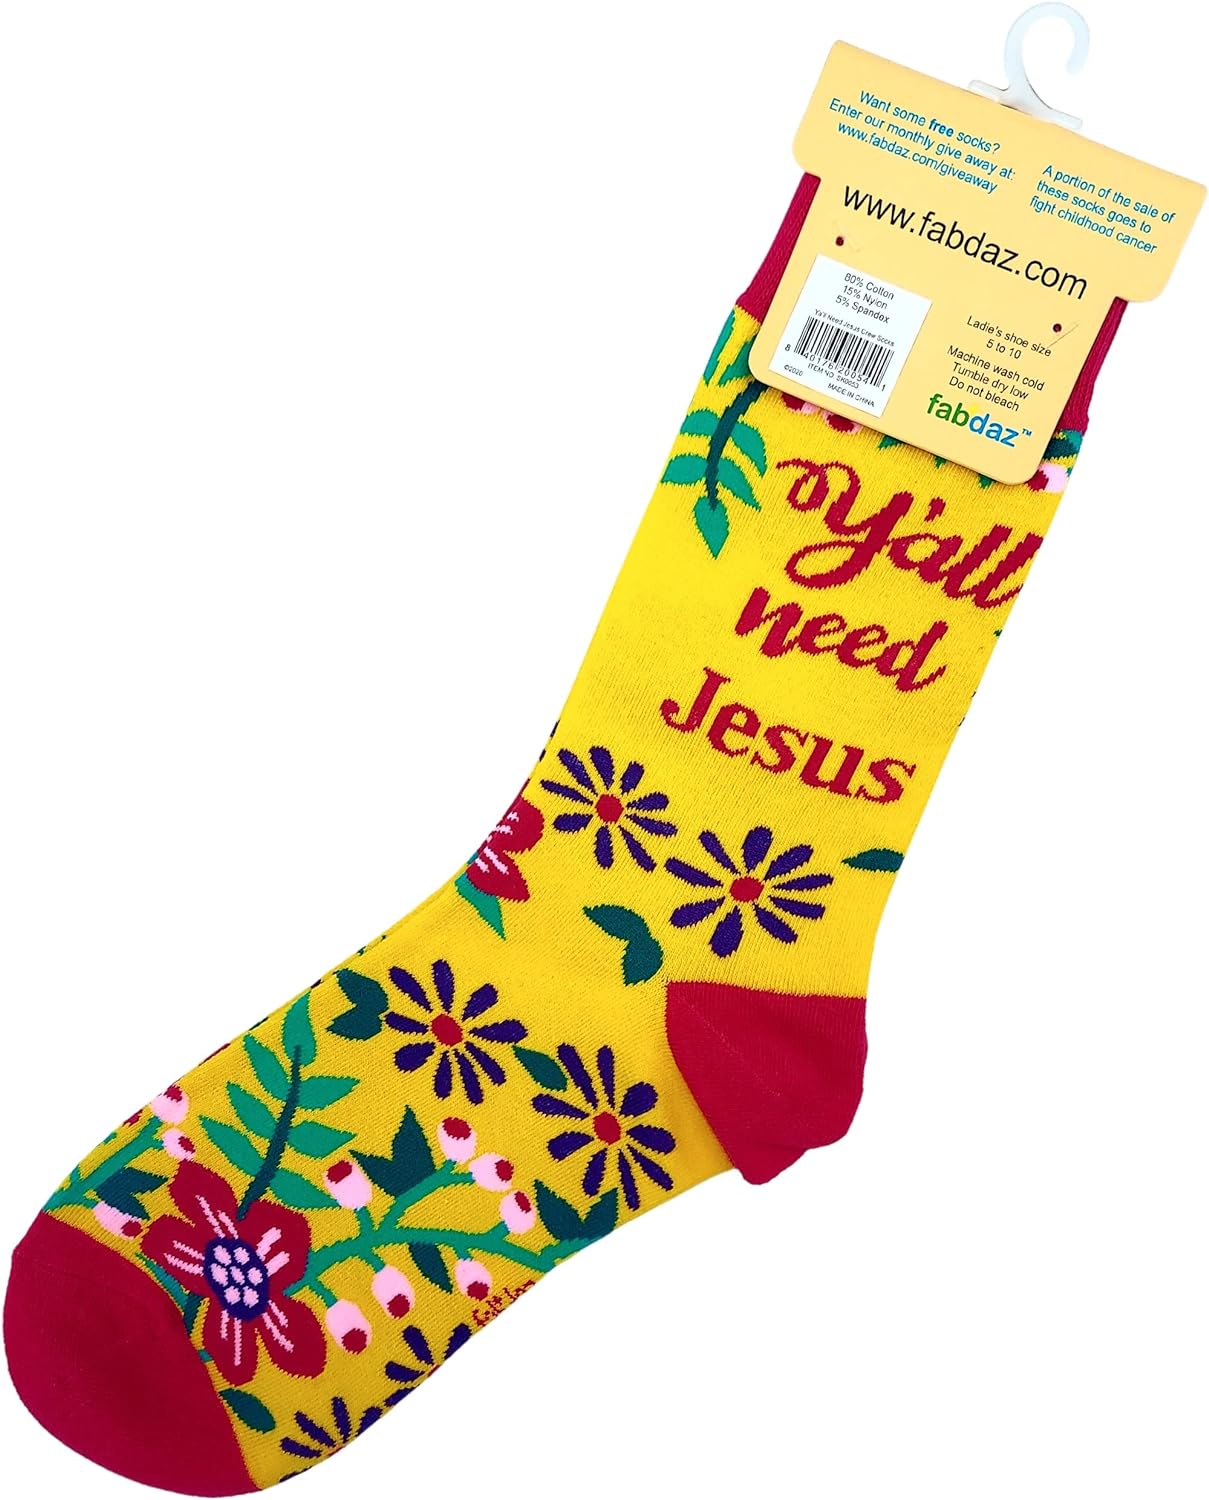 Y'all Need Jesus Funny Christian Socks Christian Gift Idea claimedbygoddesigns